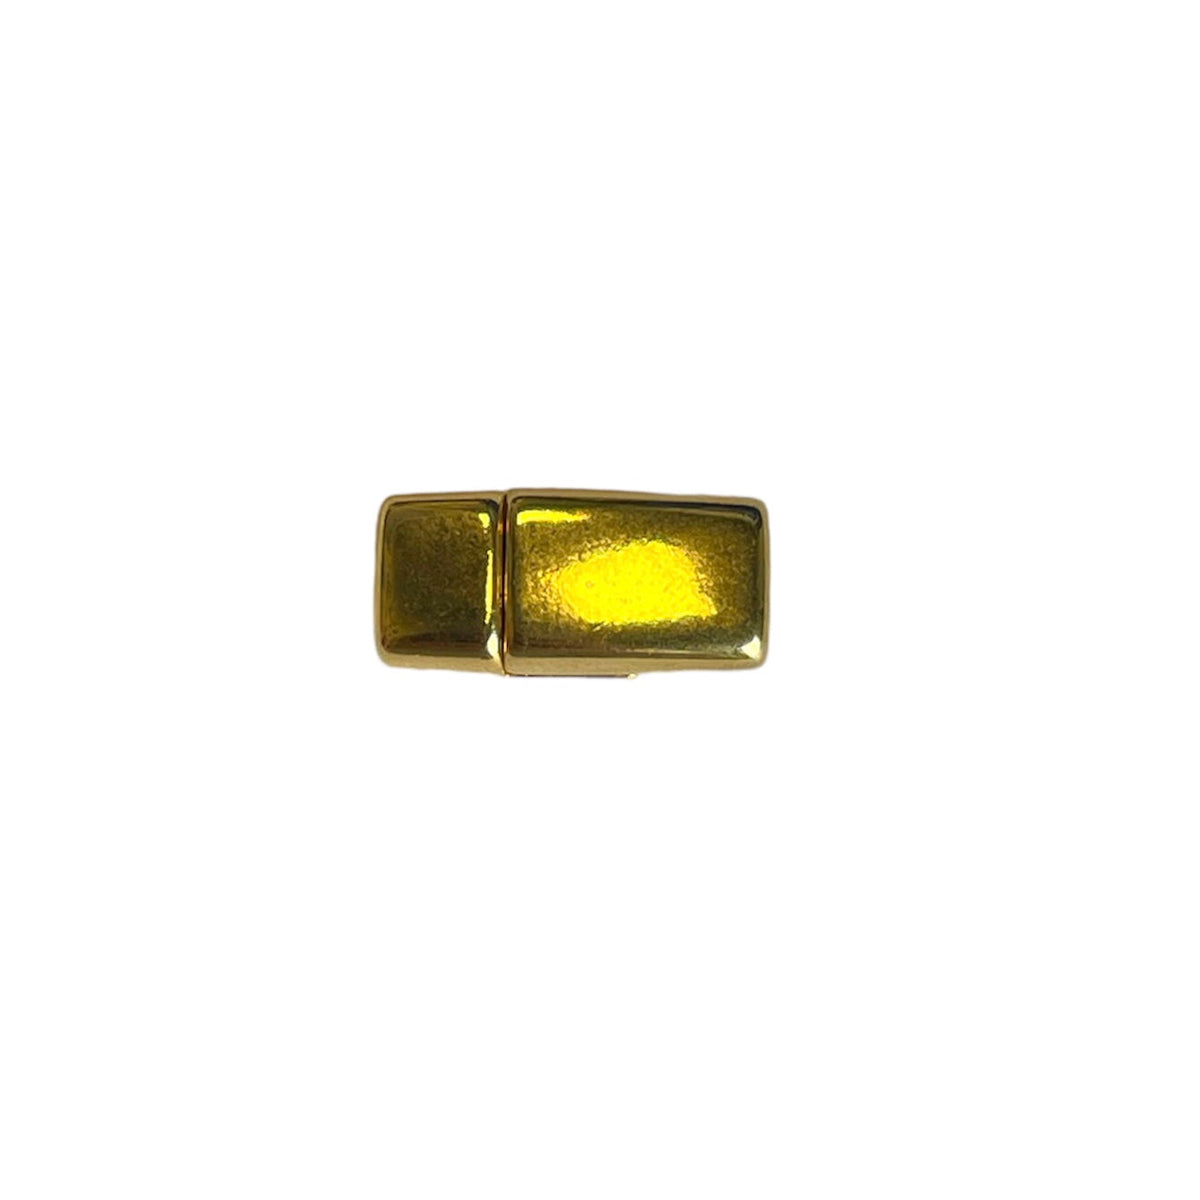 Magneetsluiting 24K goud 16x8mm-bedels-Kraaltjes van Renate